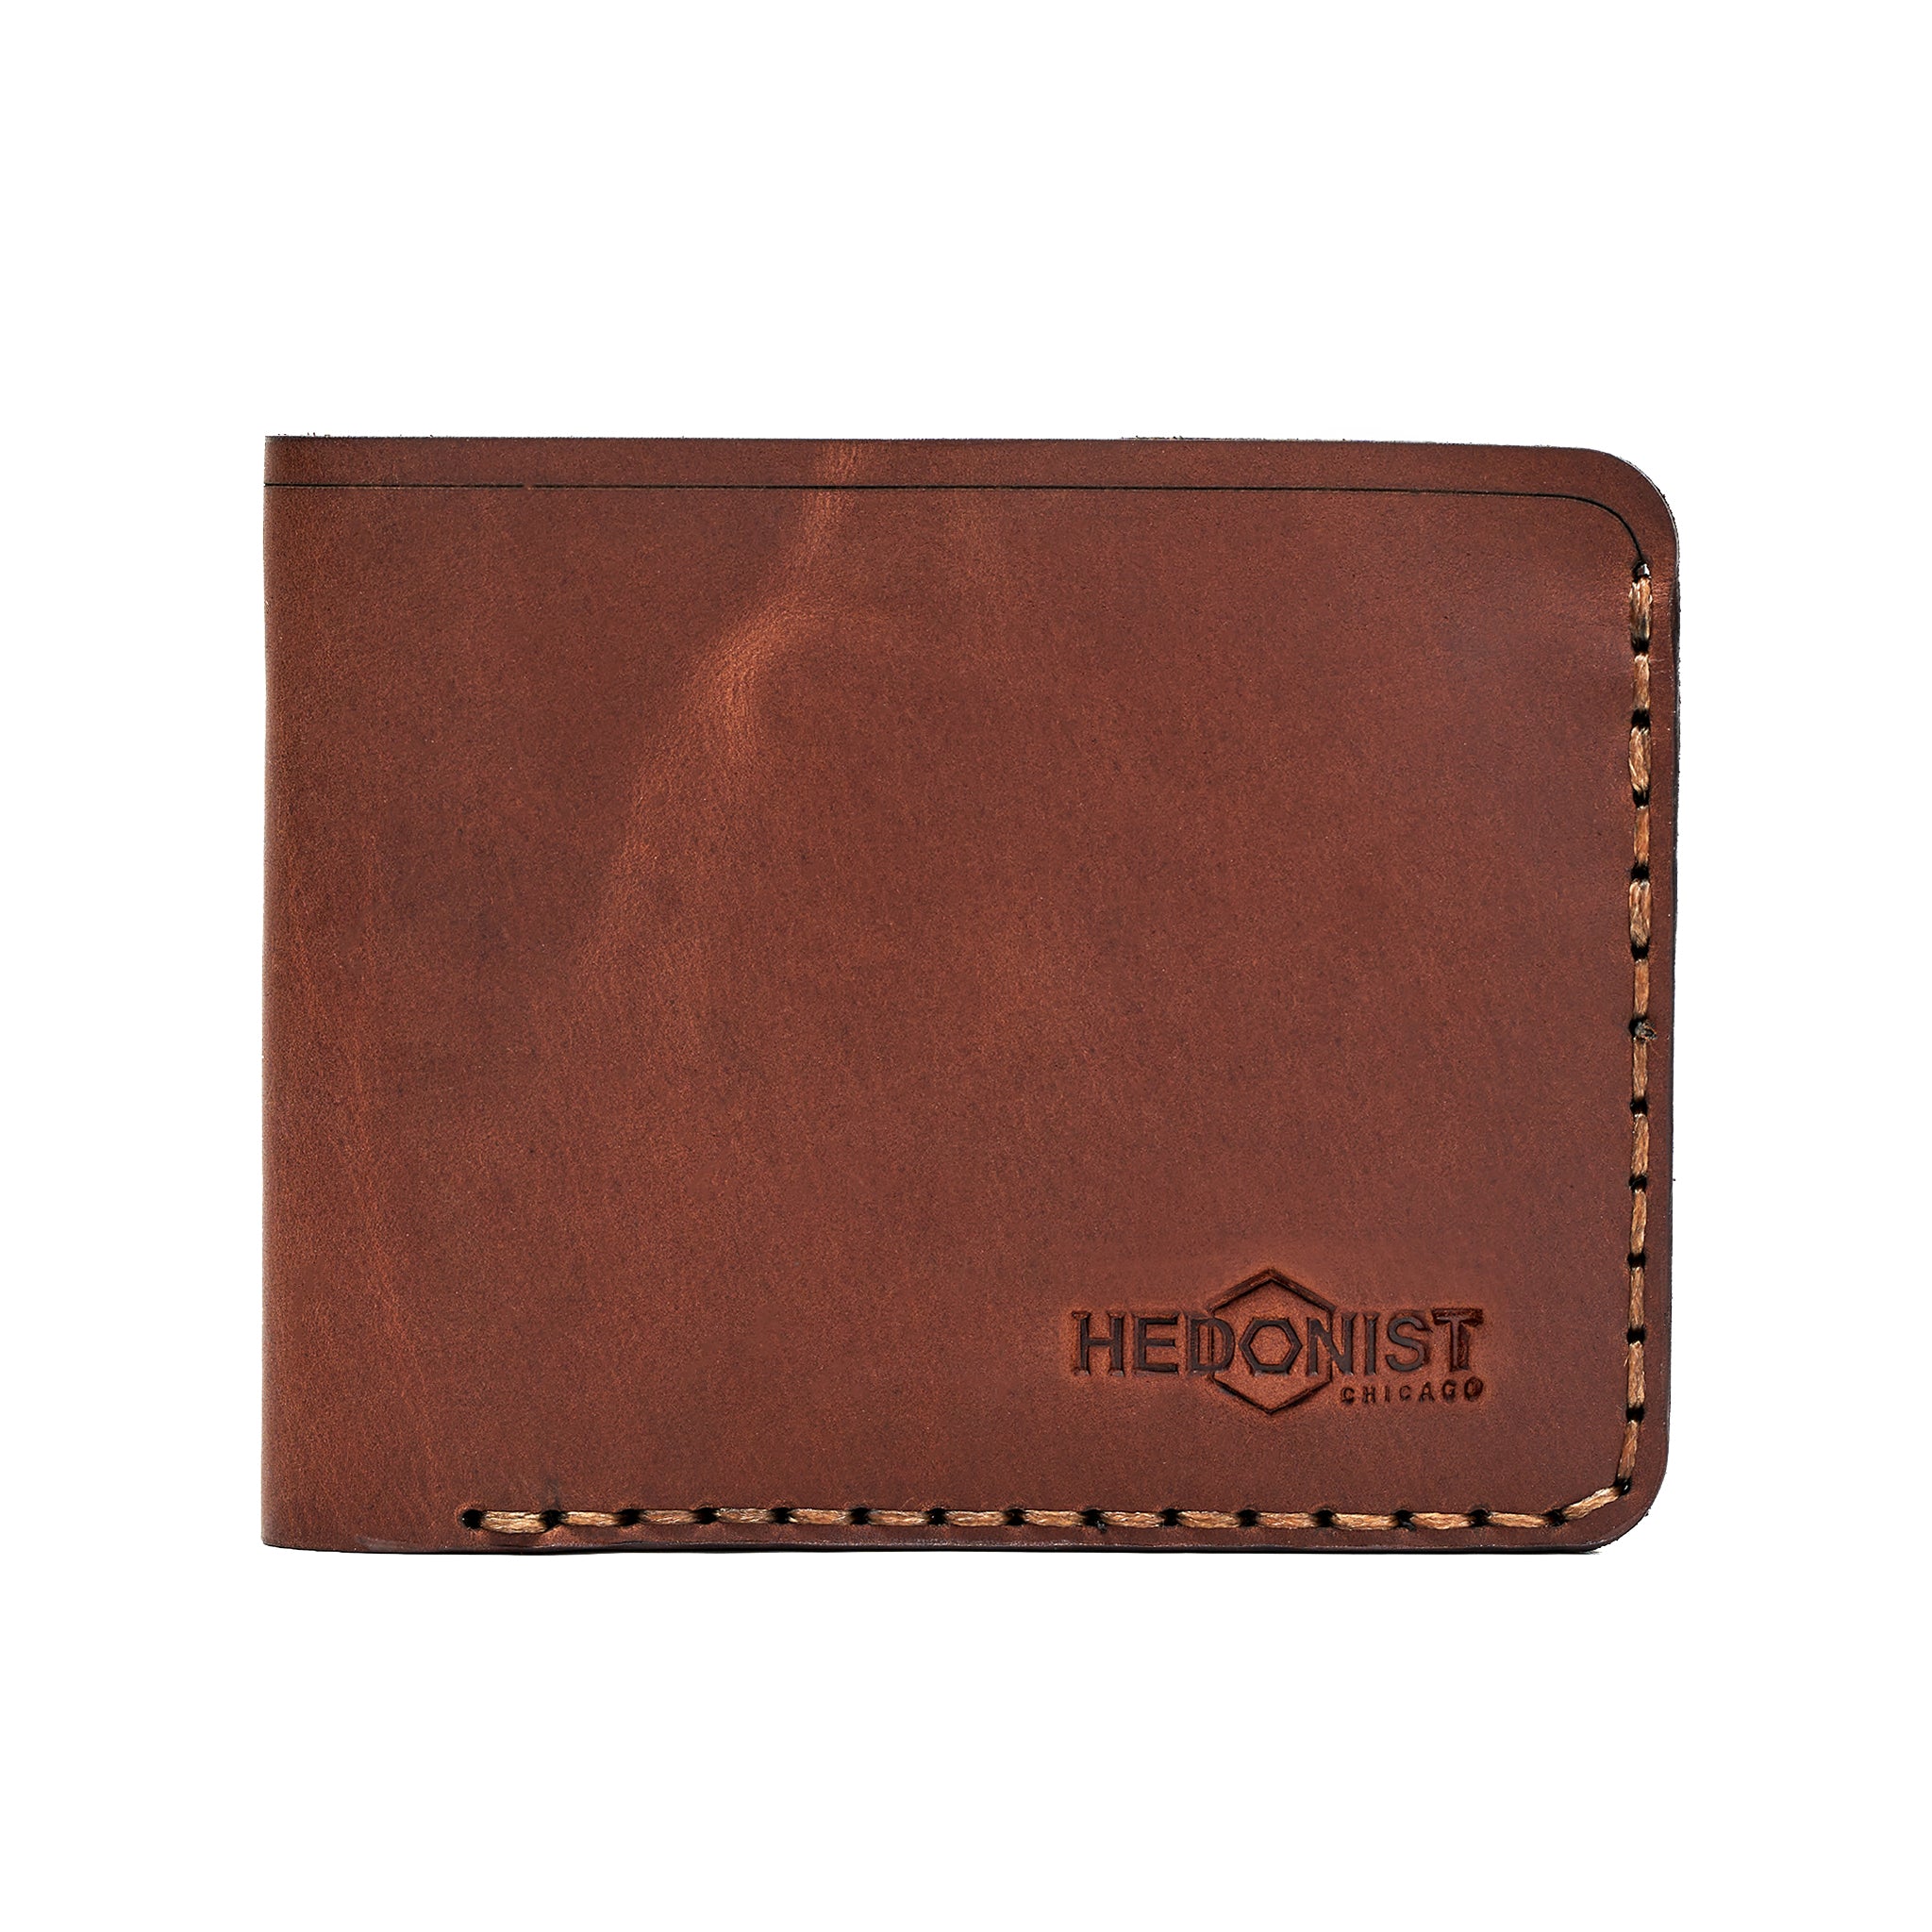 Handmade Men's Wallet 6 Card Slots Whisky Pull-Up 31707916501143